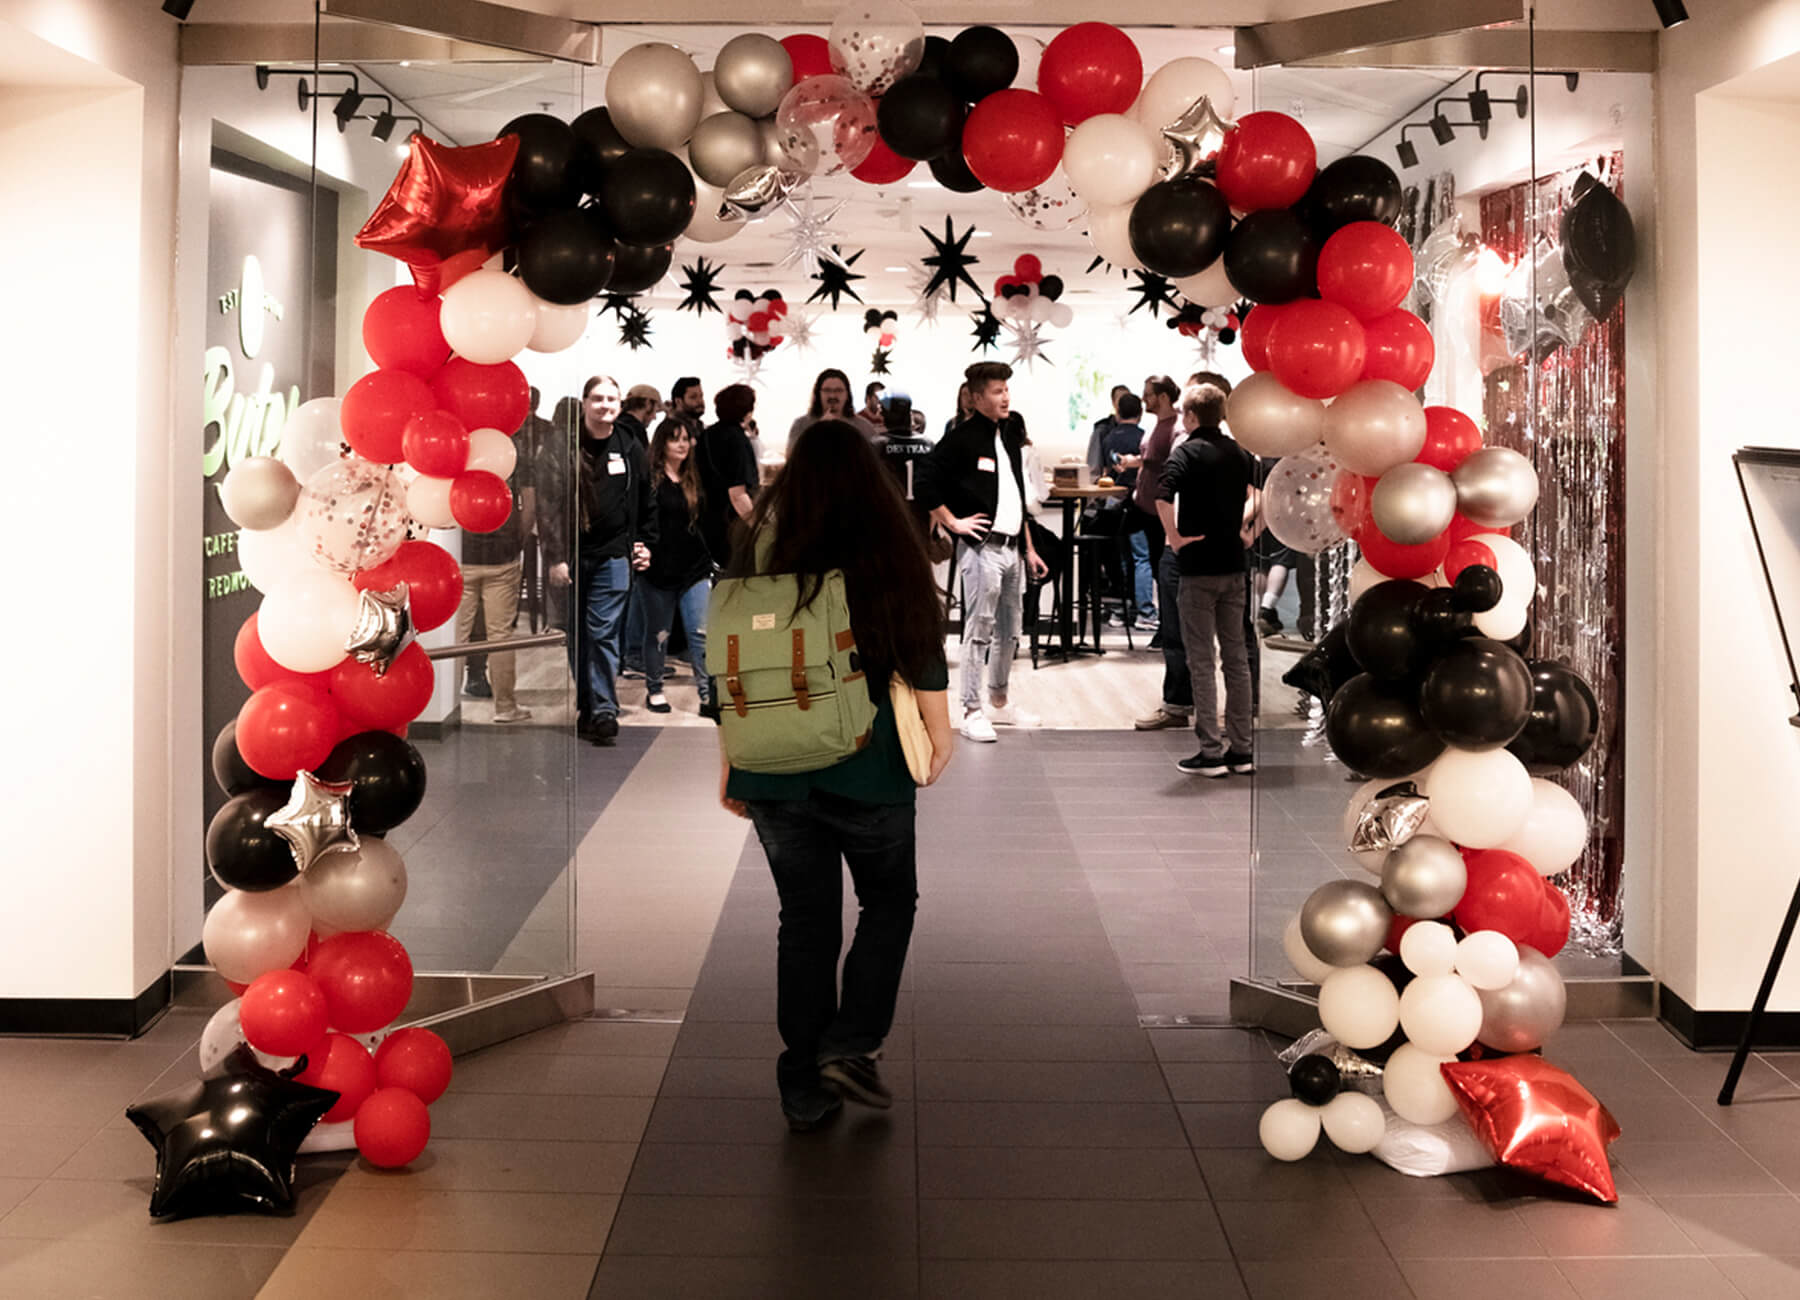 A balloon arch forms over the entrance to the DigiPen Alumni Reunion.